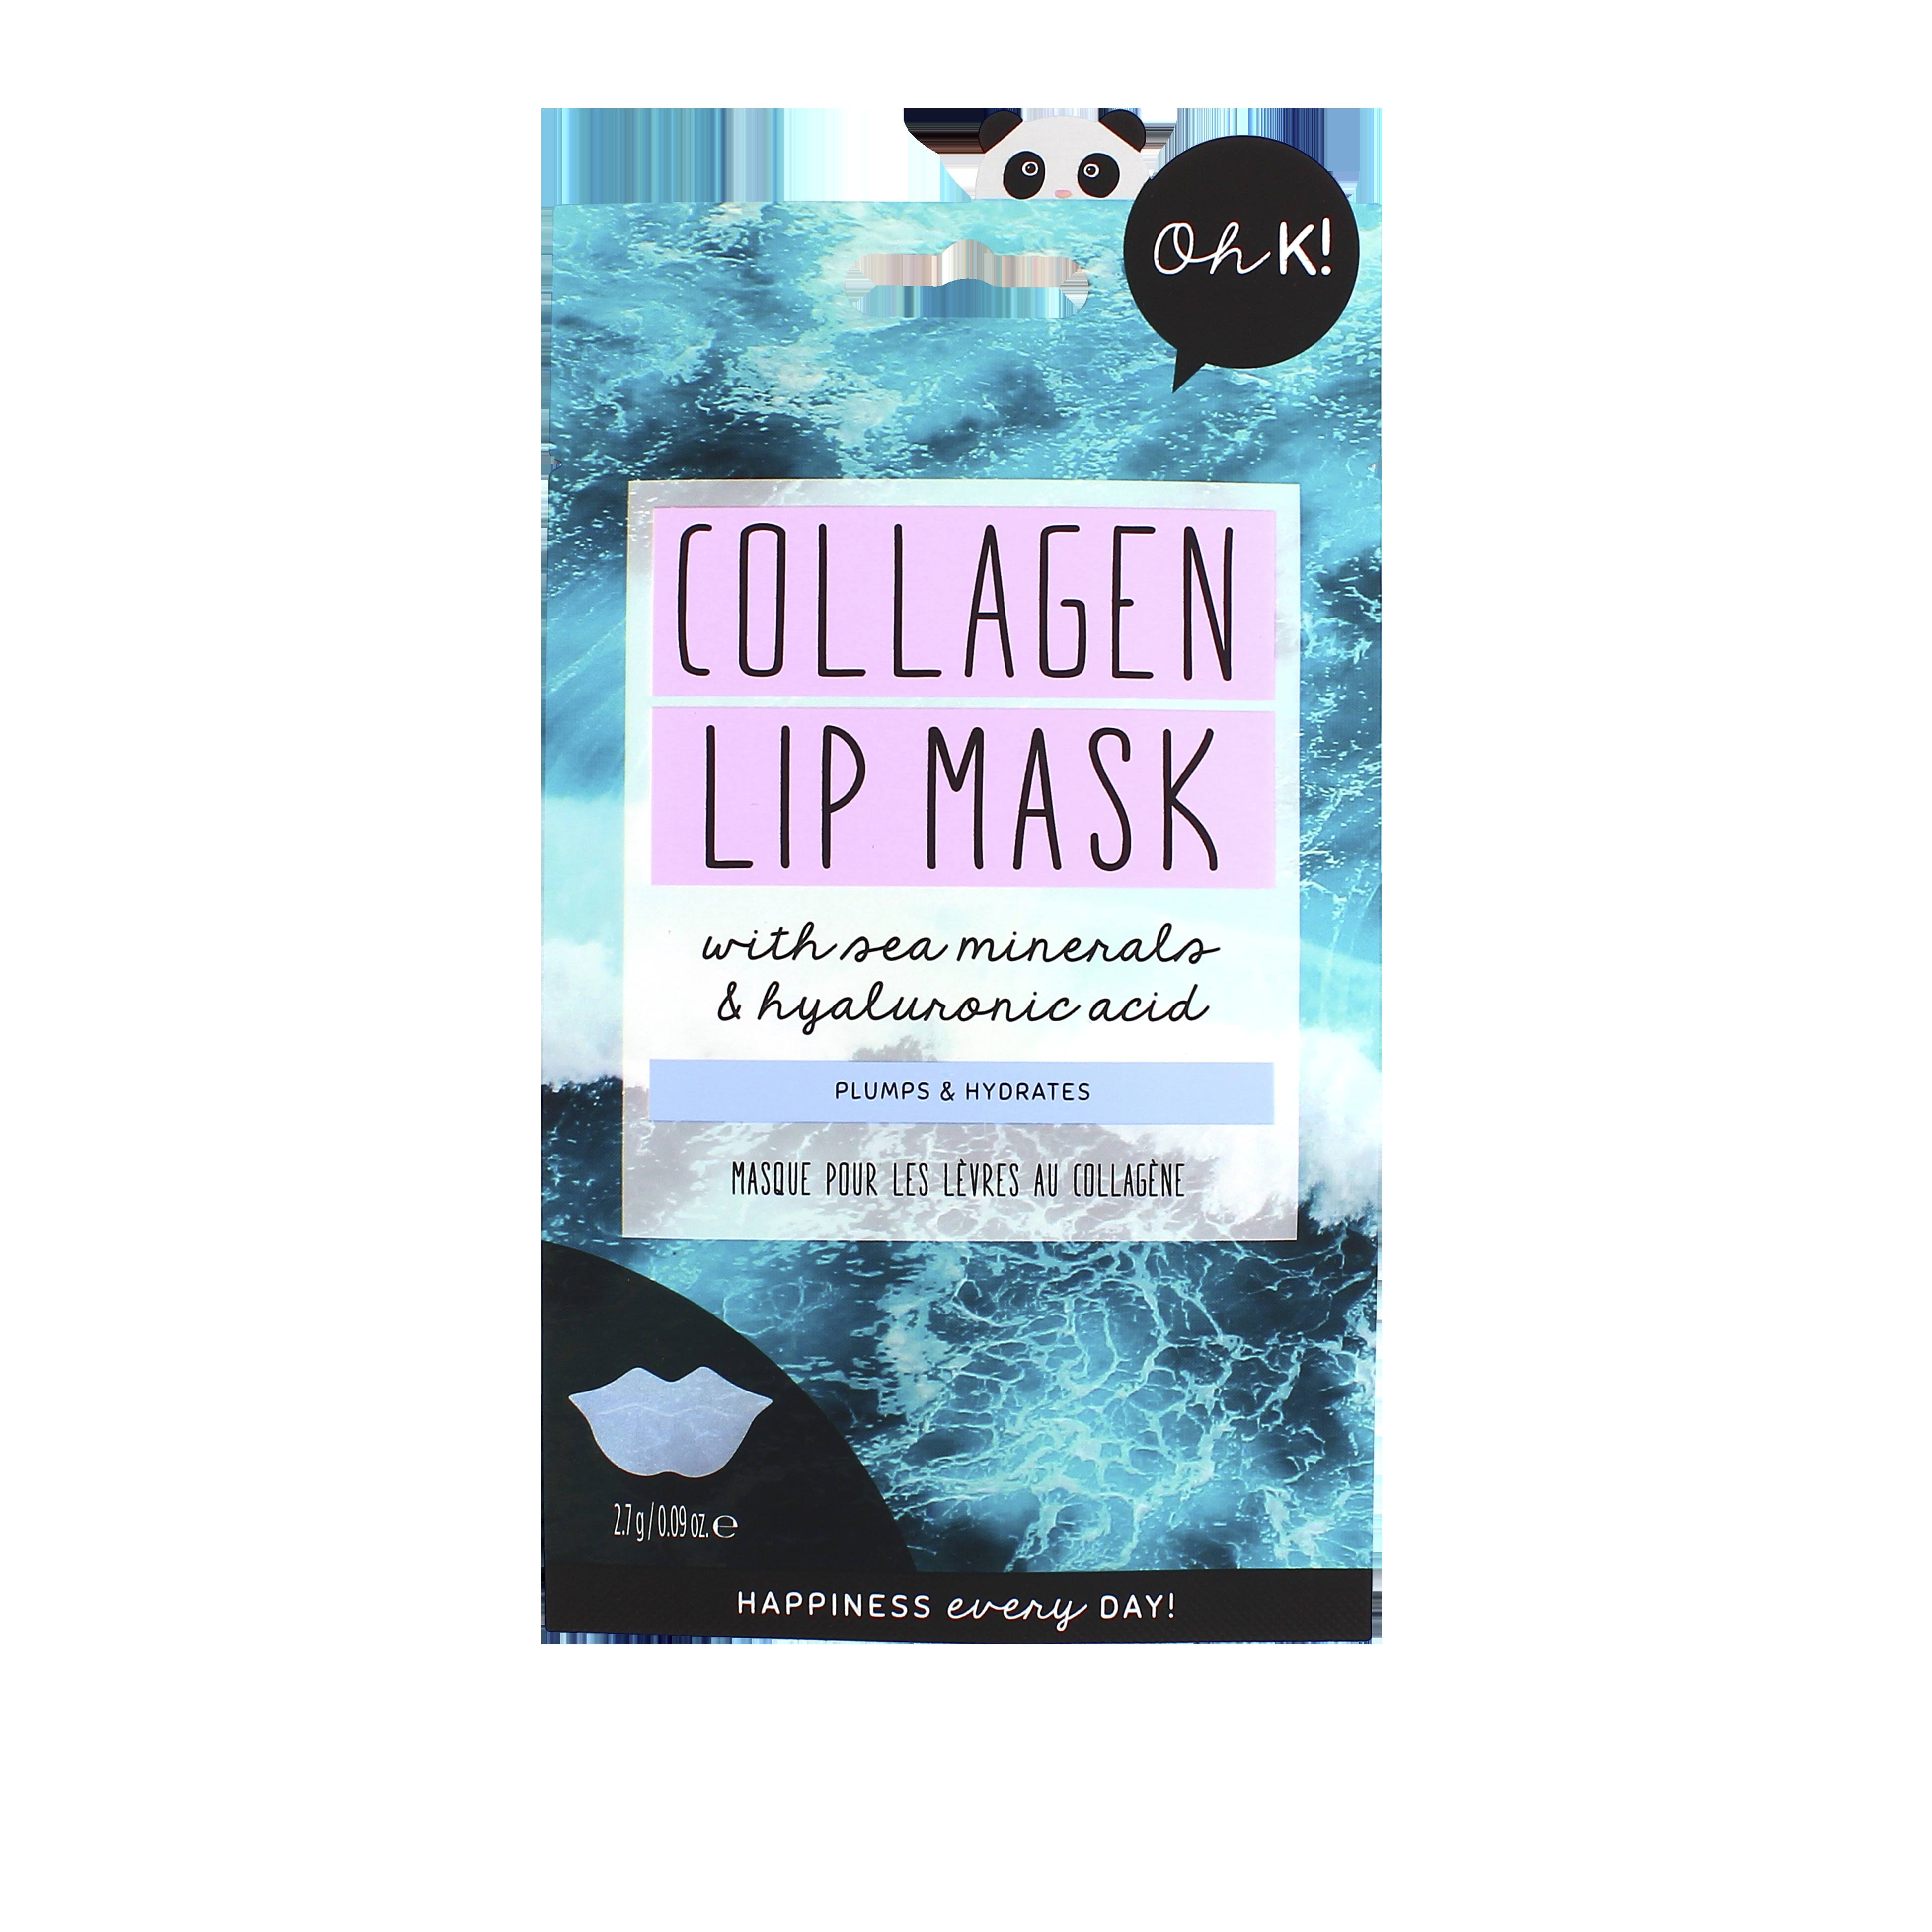 Oh K! Collagen Lip Mask